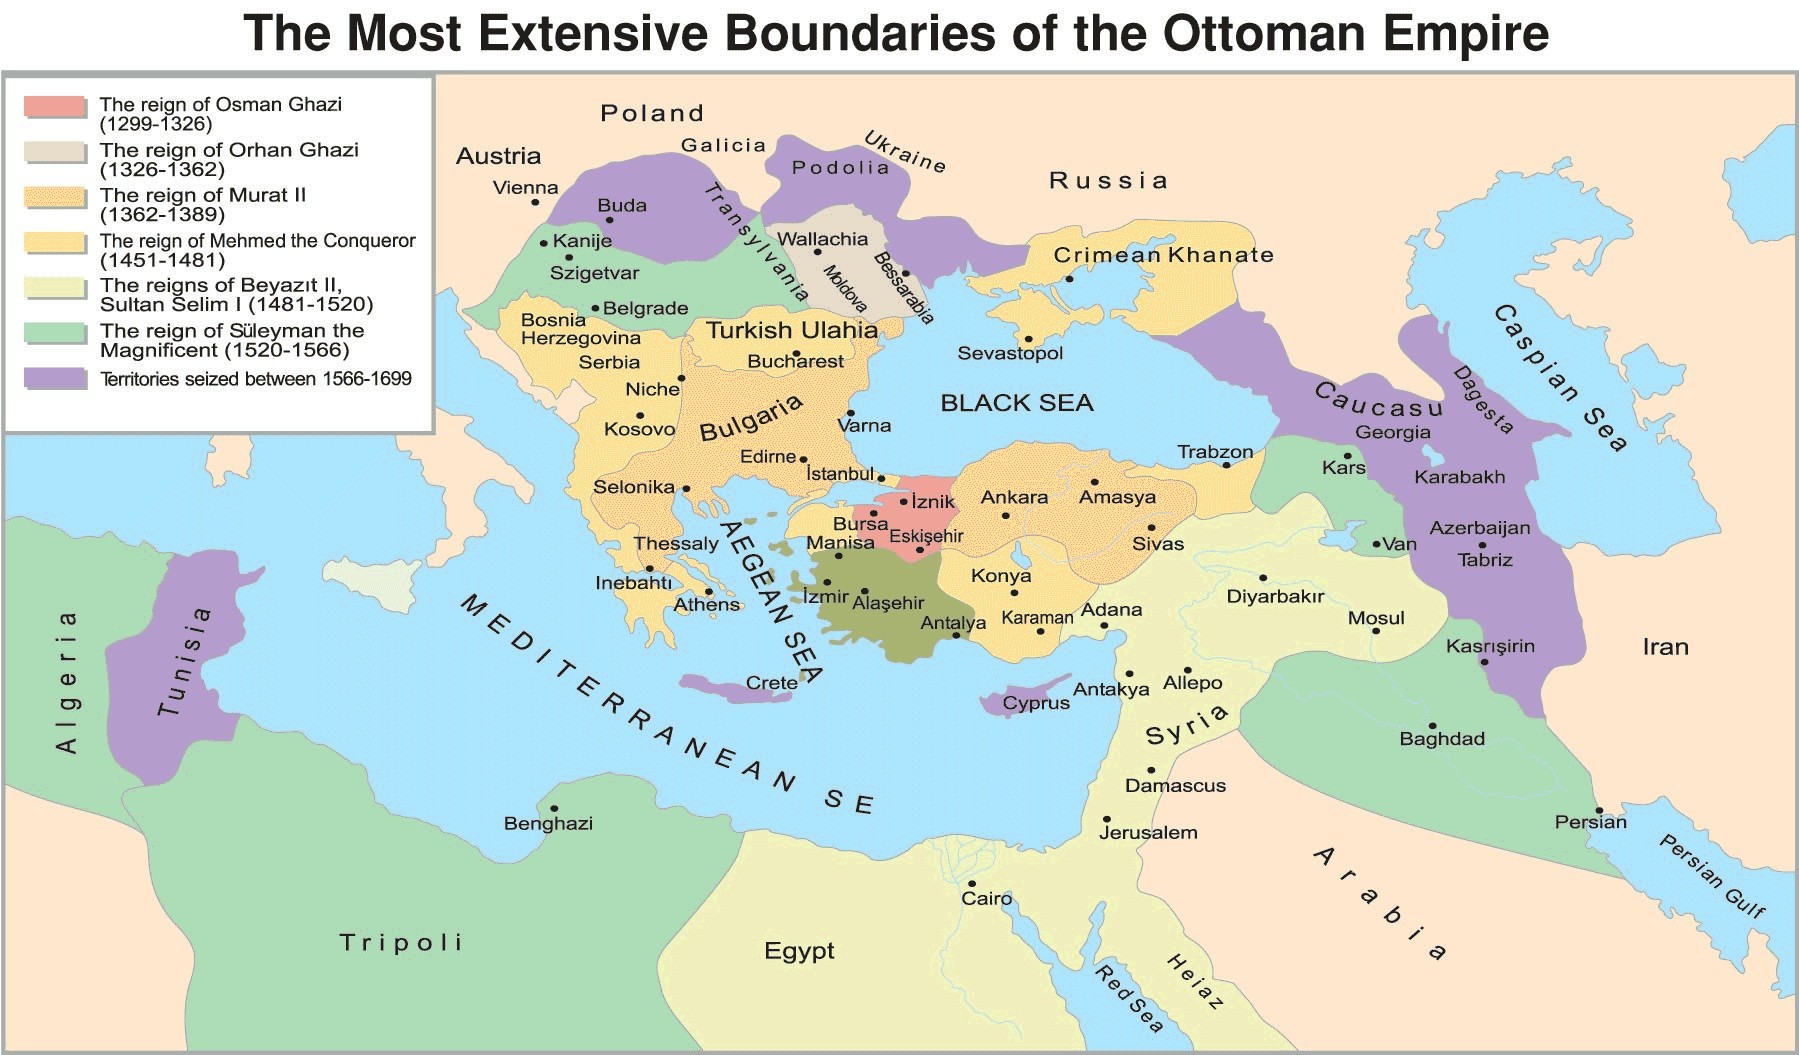 Ottoman Empire Map 